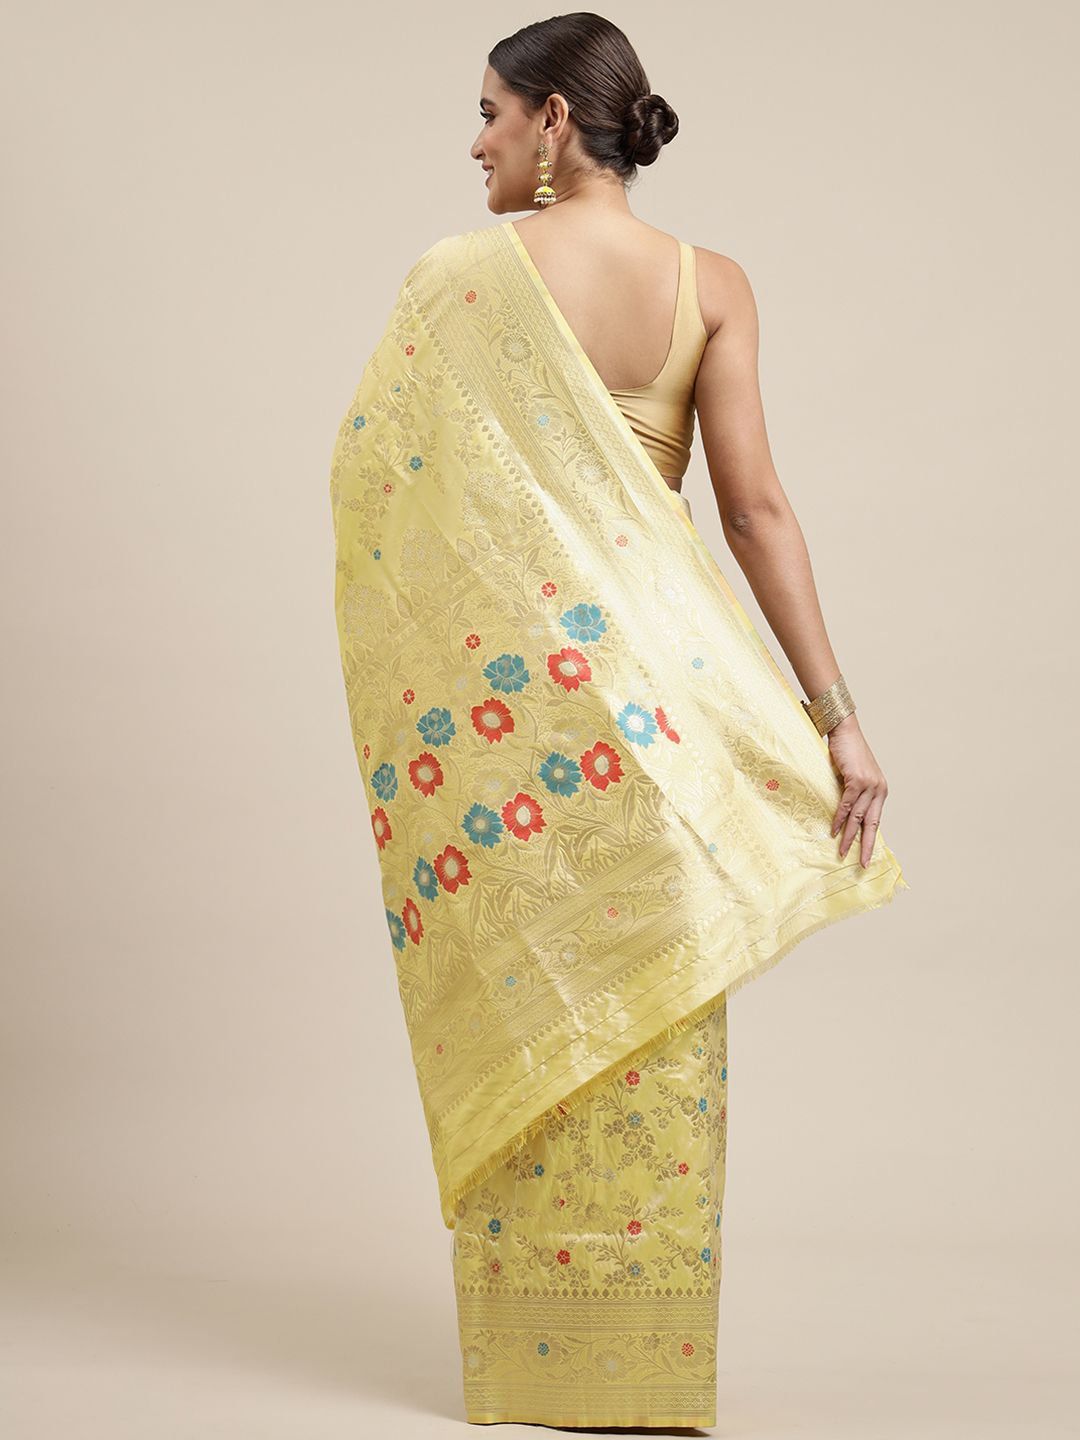 White Color Soft Silk Banarasi Saree Gorgeous Meenakari Design And Pallu